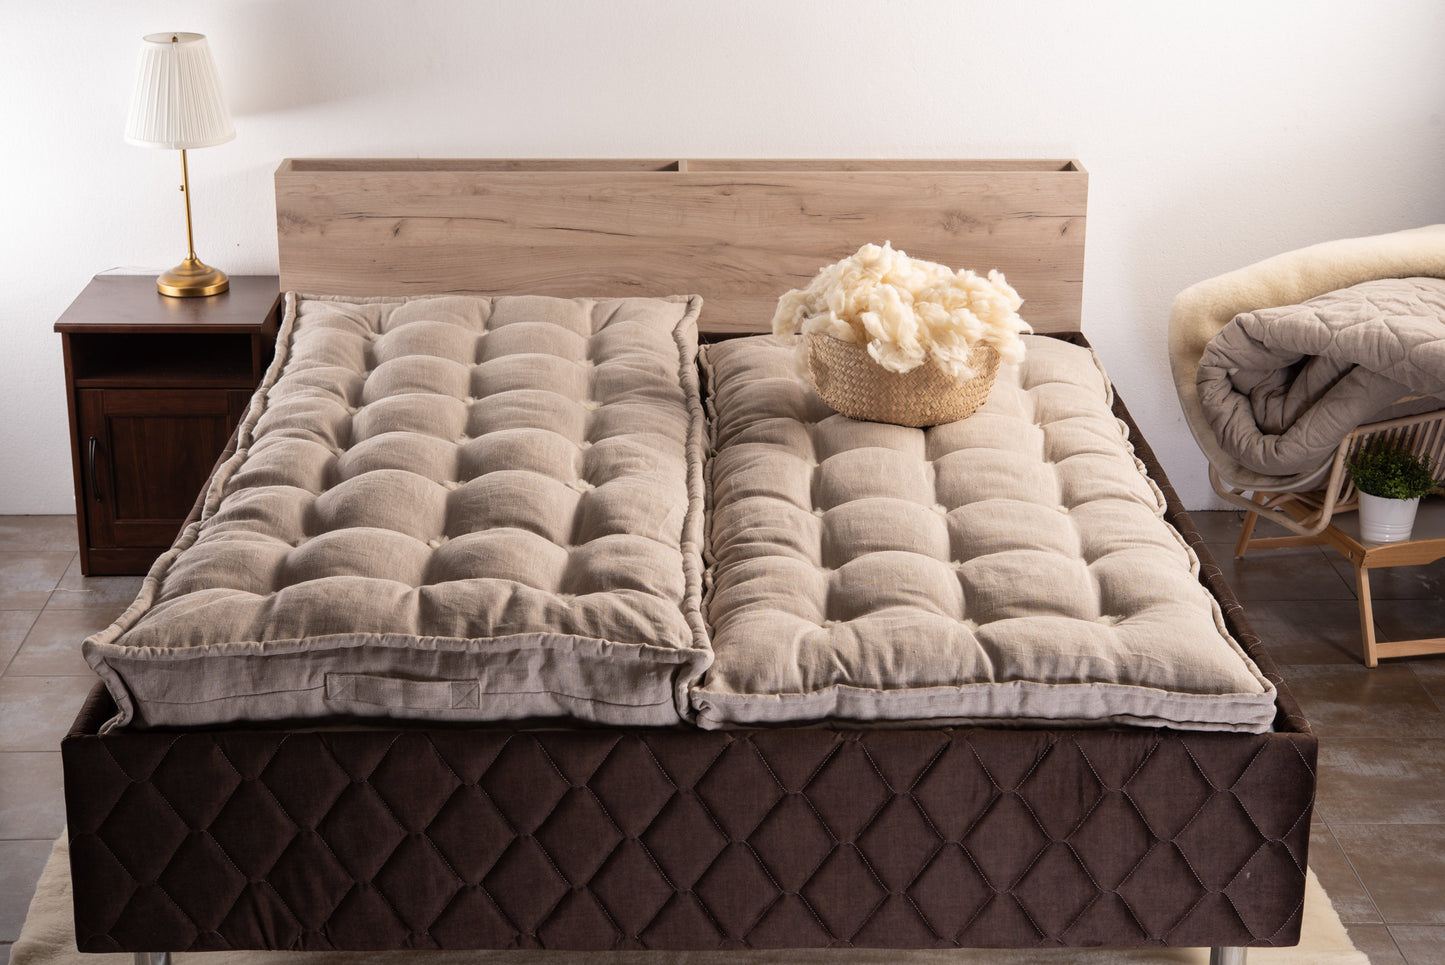 Natural merino wool mattress topper